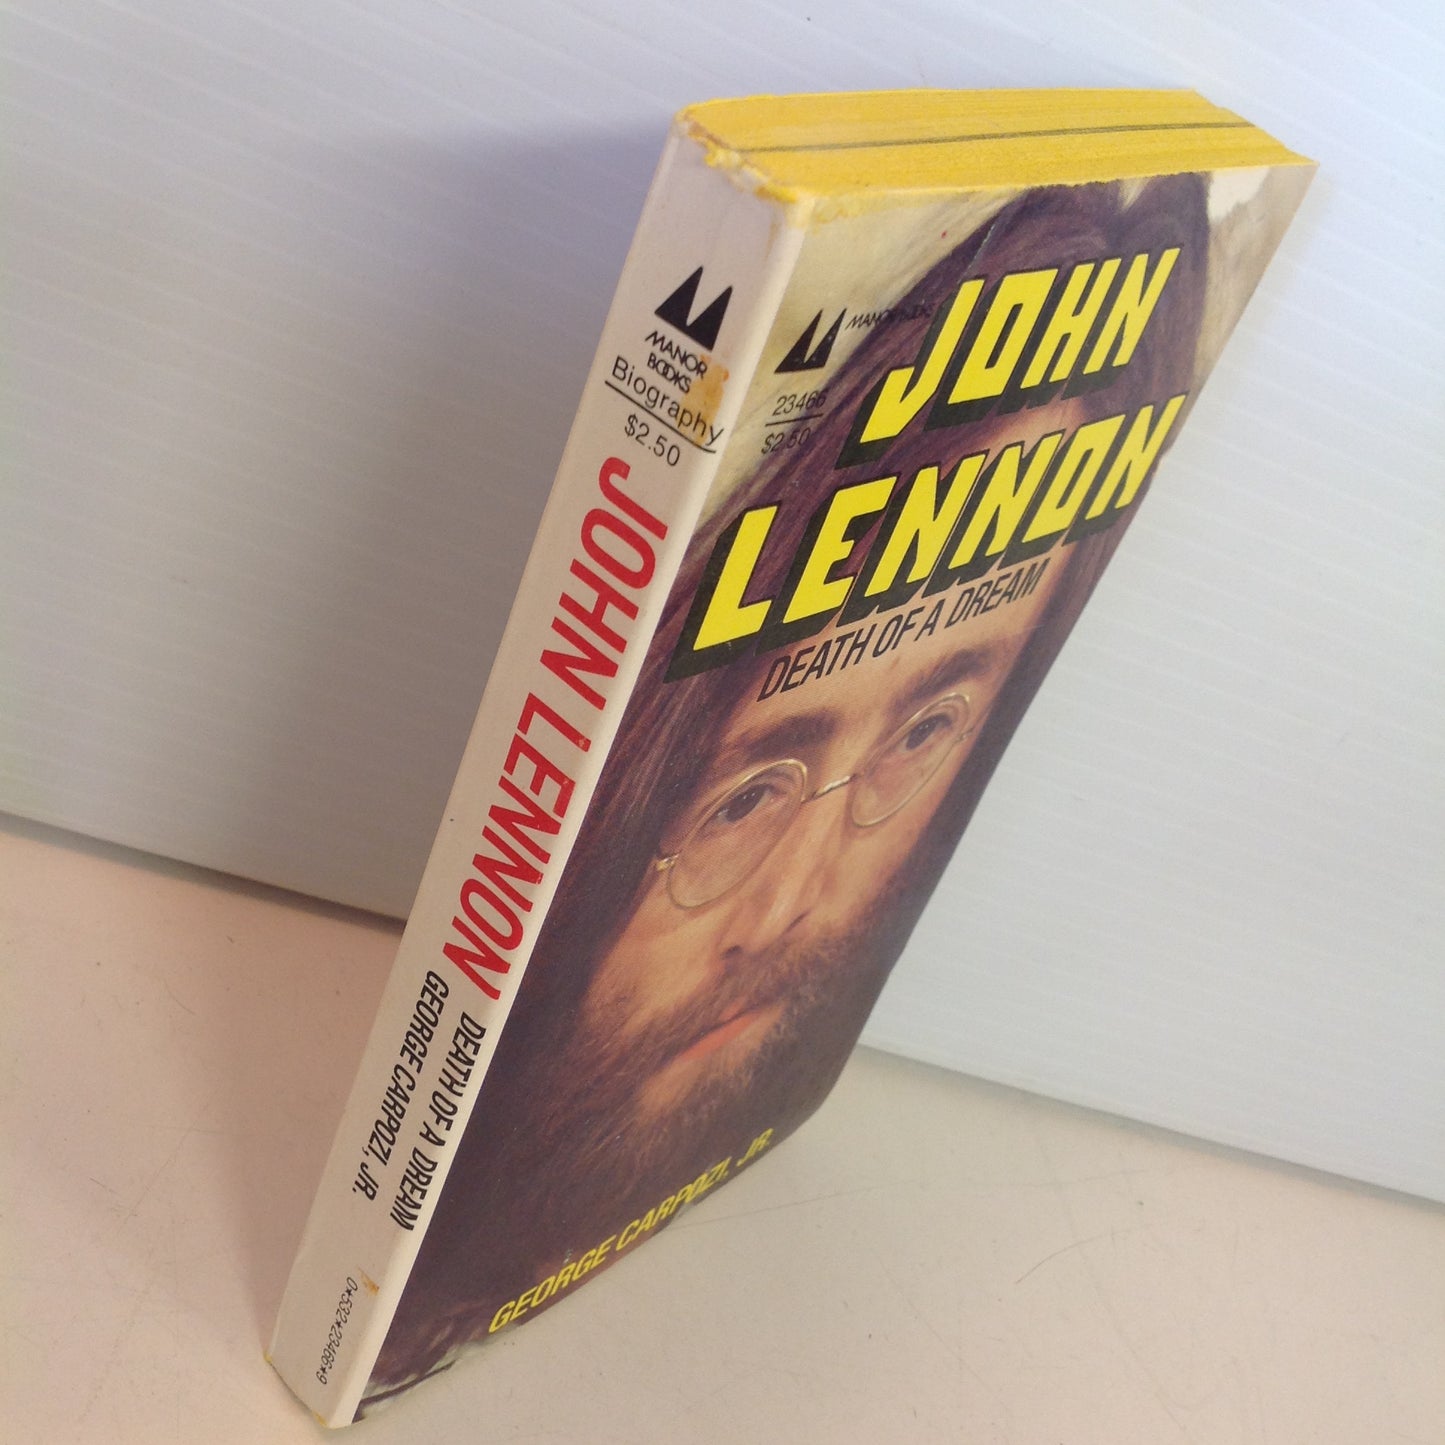 Vintage Manor Books John Lennon Death of a Dream Paperback Book